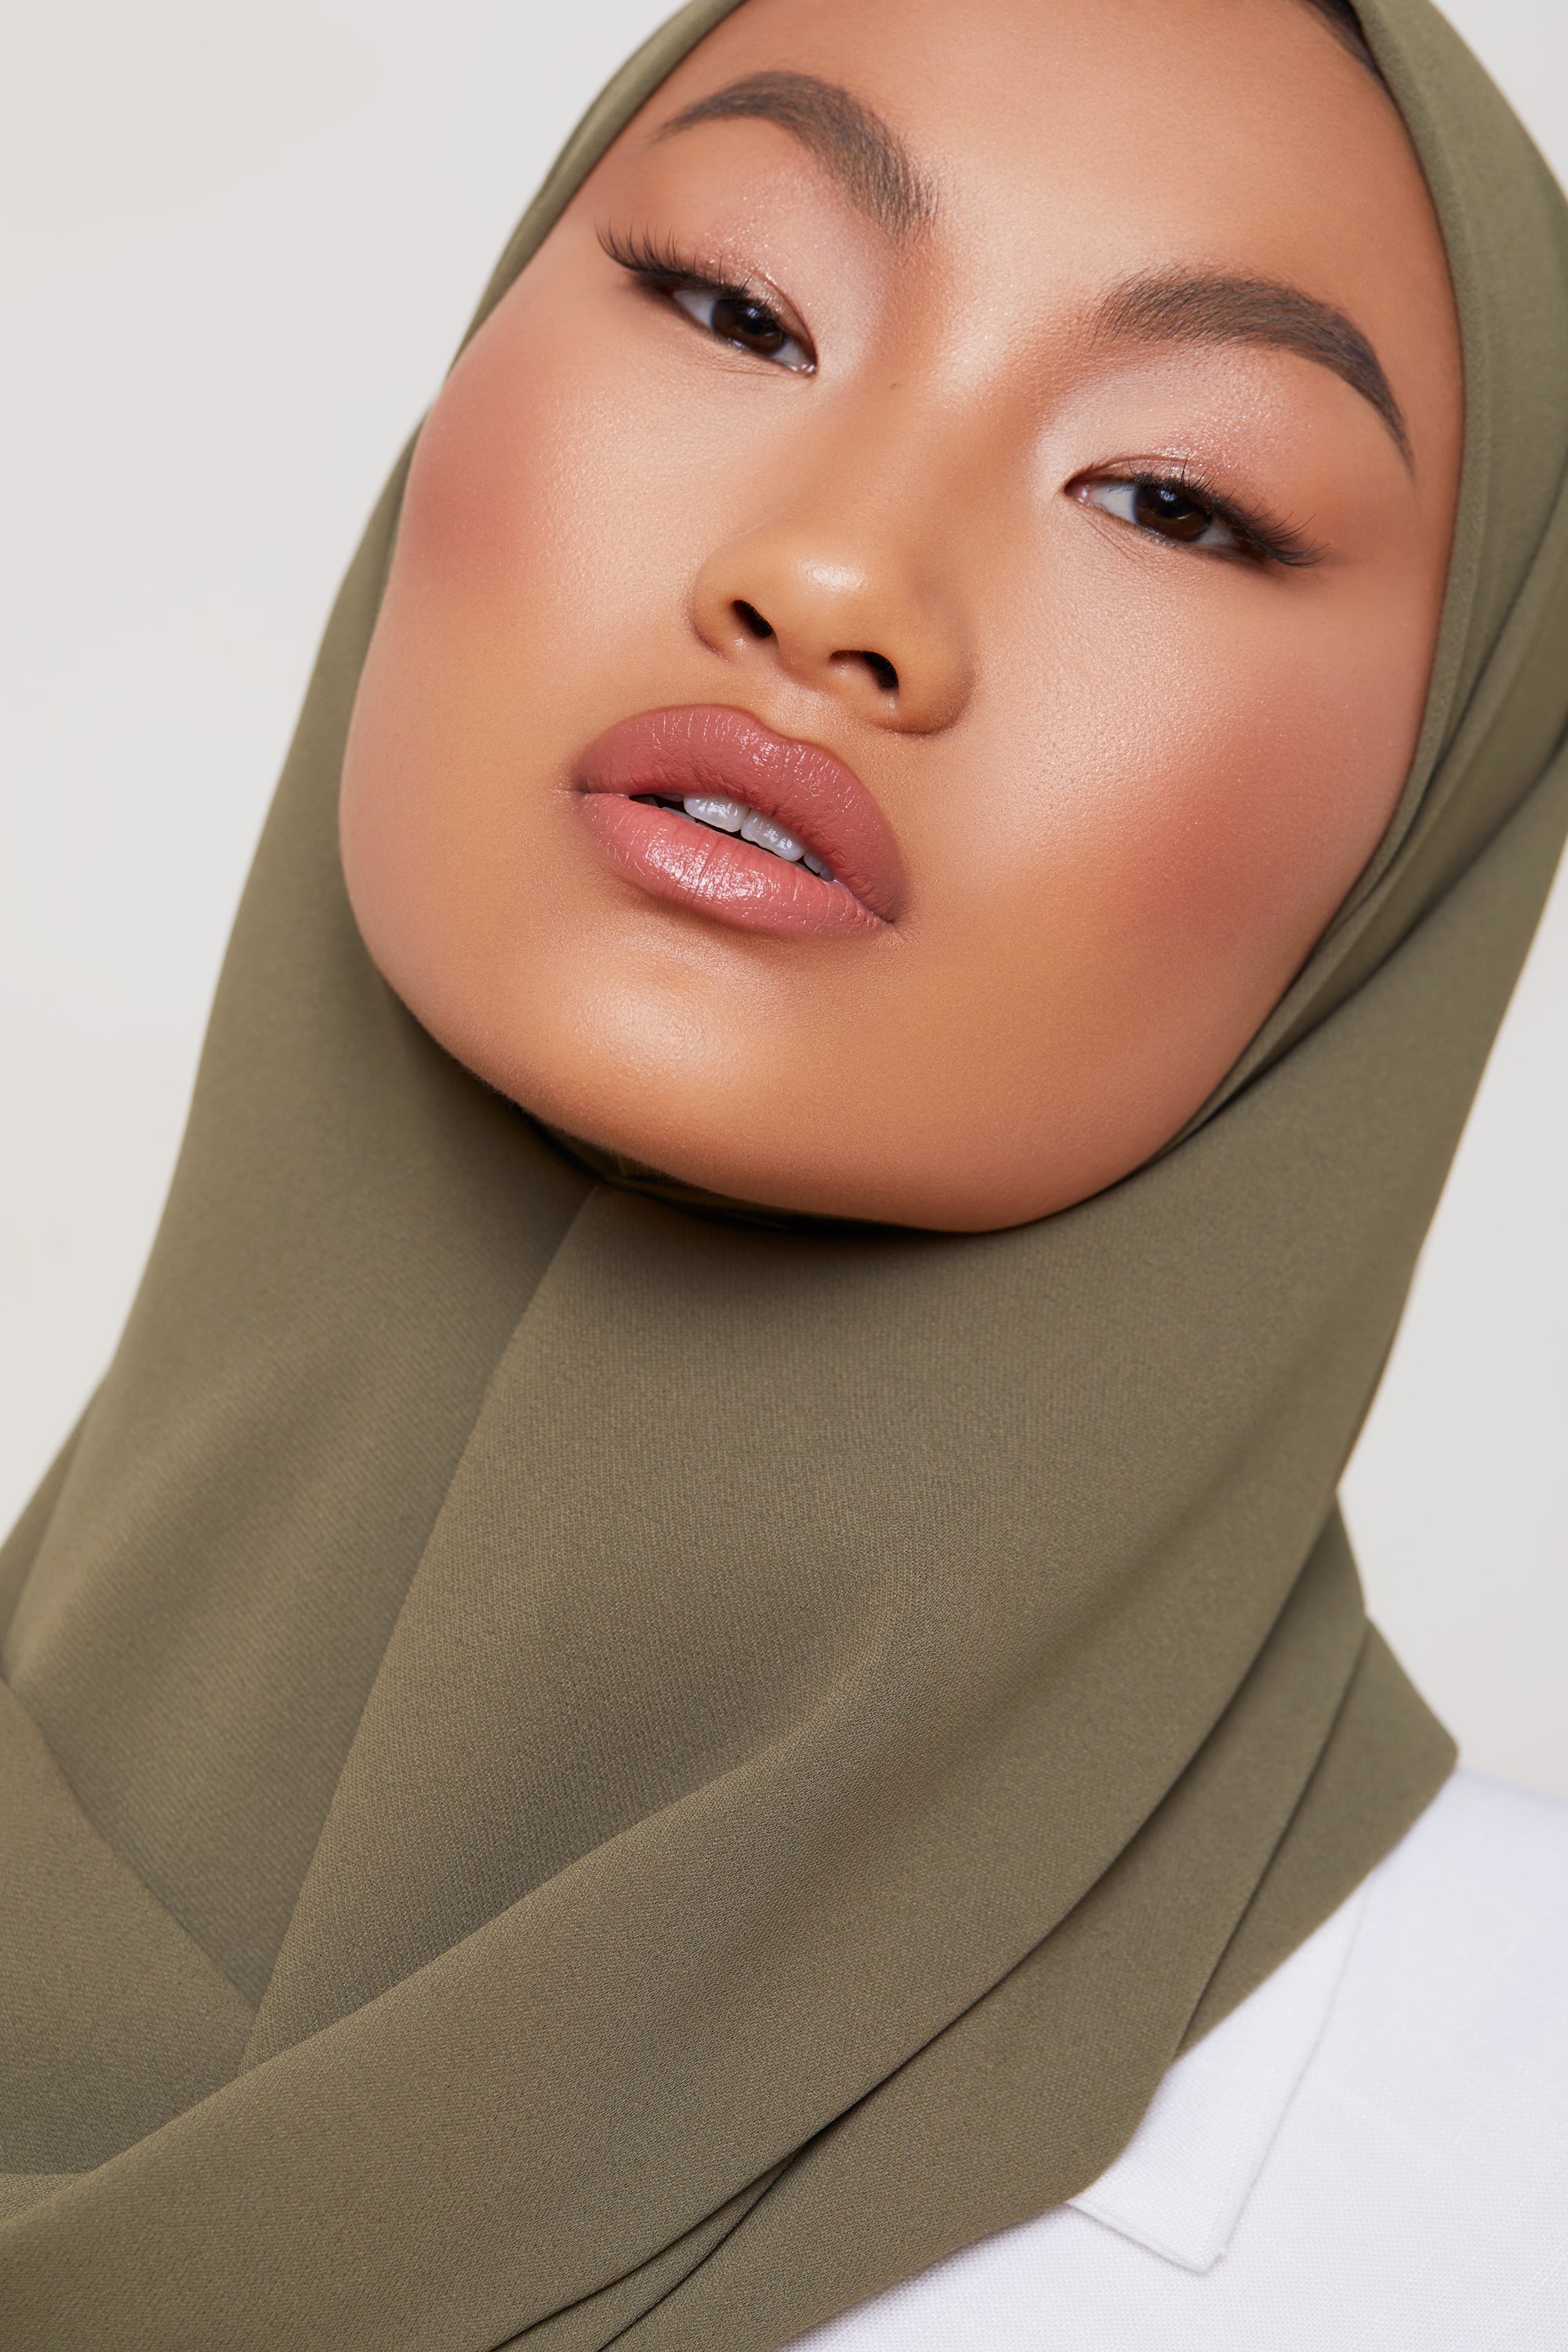 TEXTURE Classic Chiffon Hijab - Khaki Green Veiled Collection 